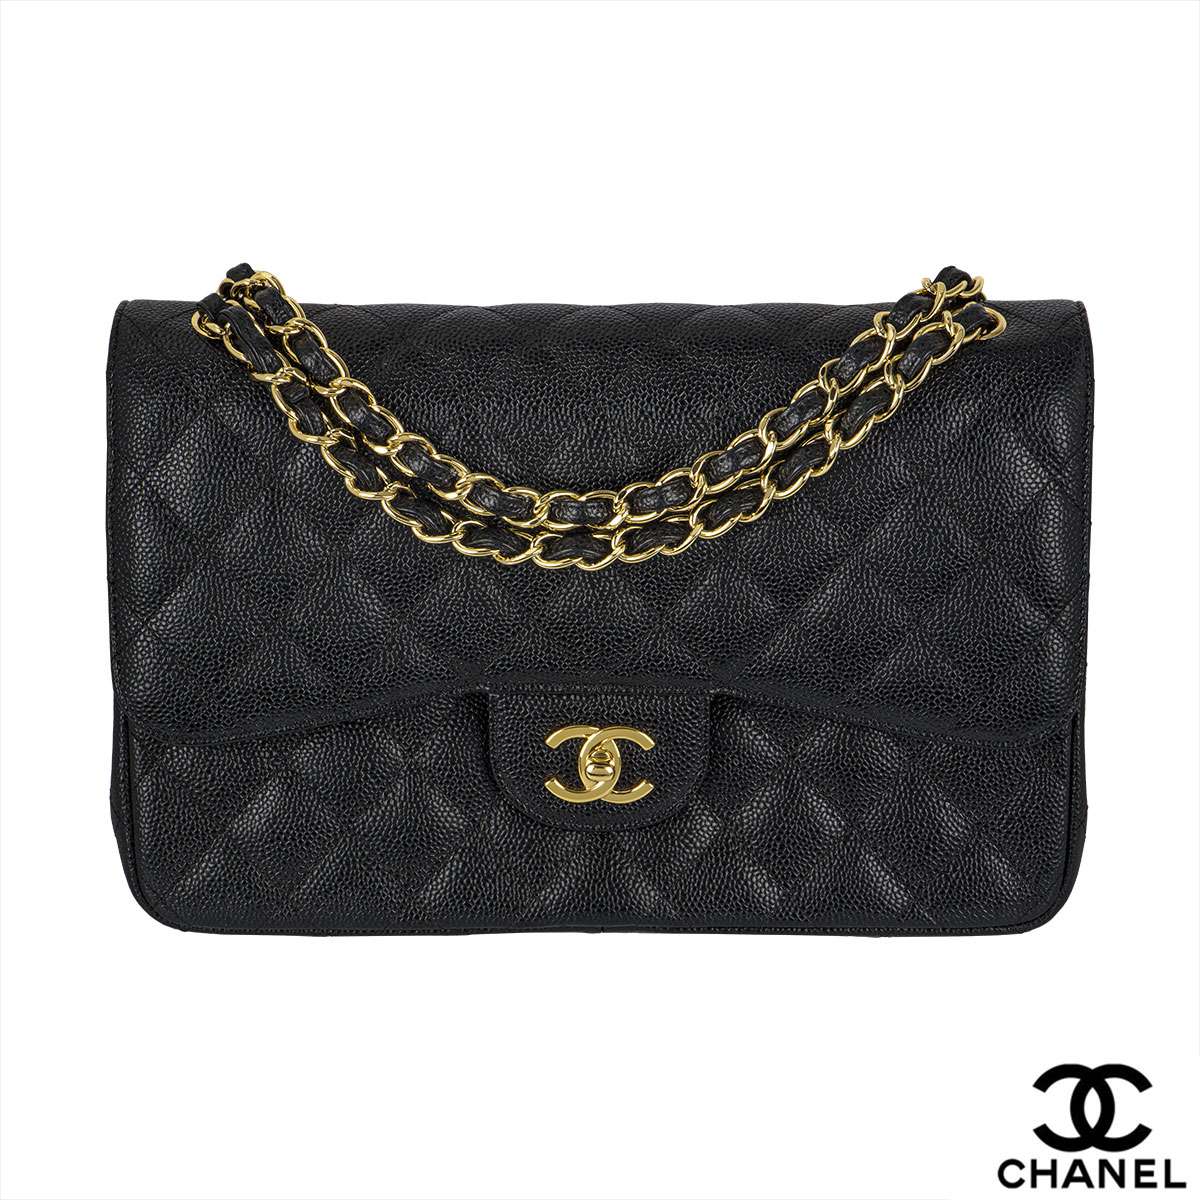 Chanel Classic flap Jumbo Handbag in black Caviar leather | Rich Diamonds